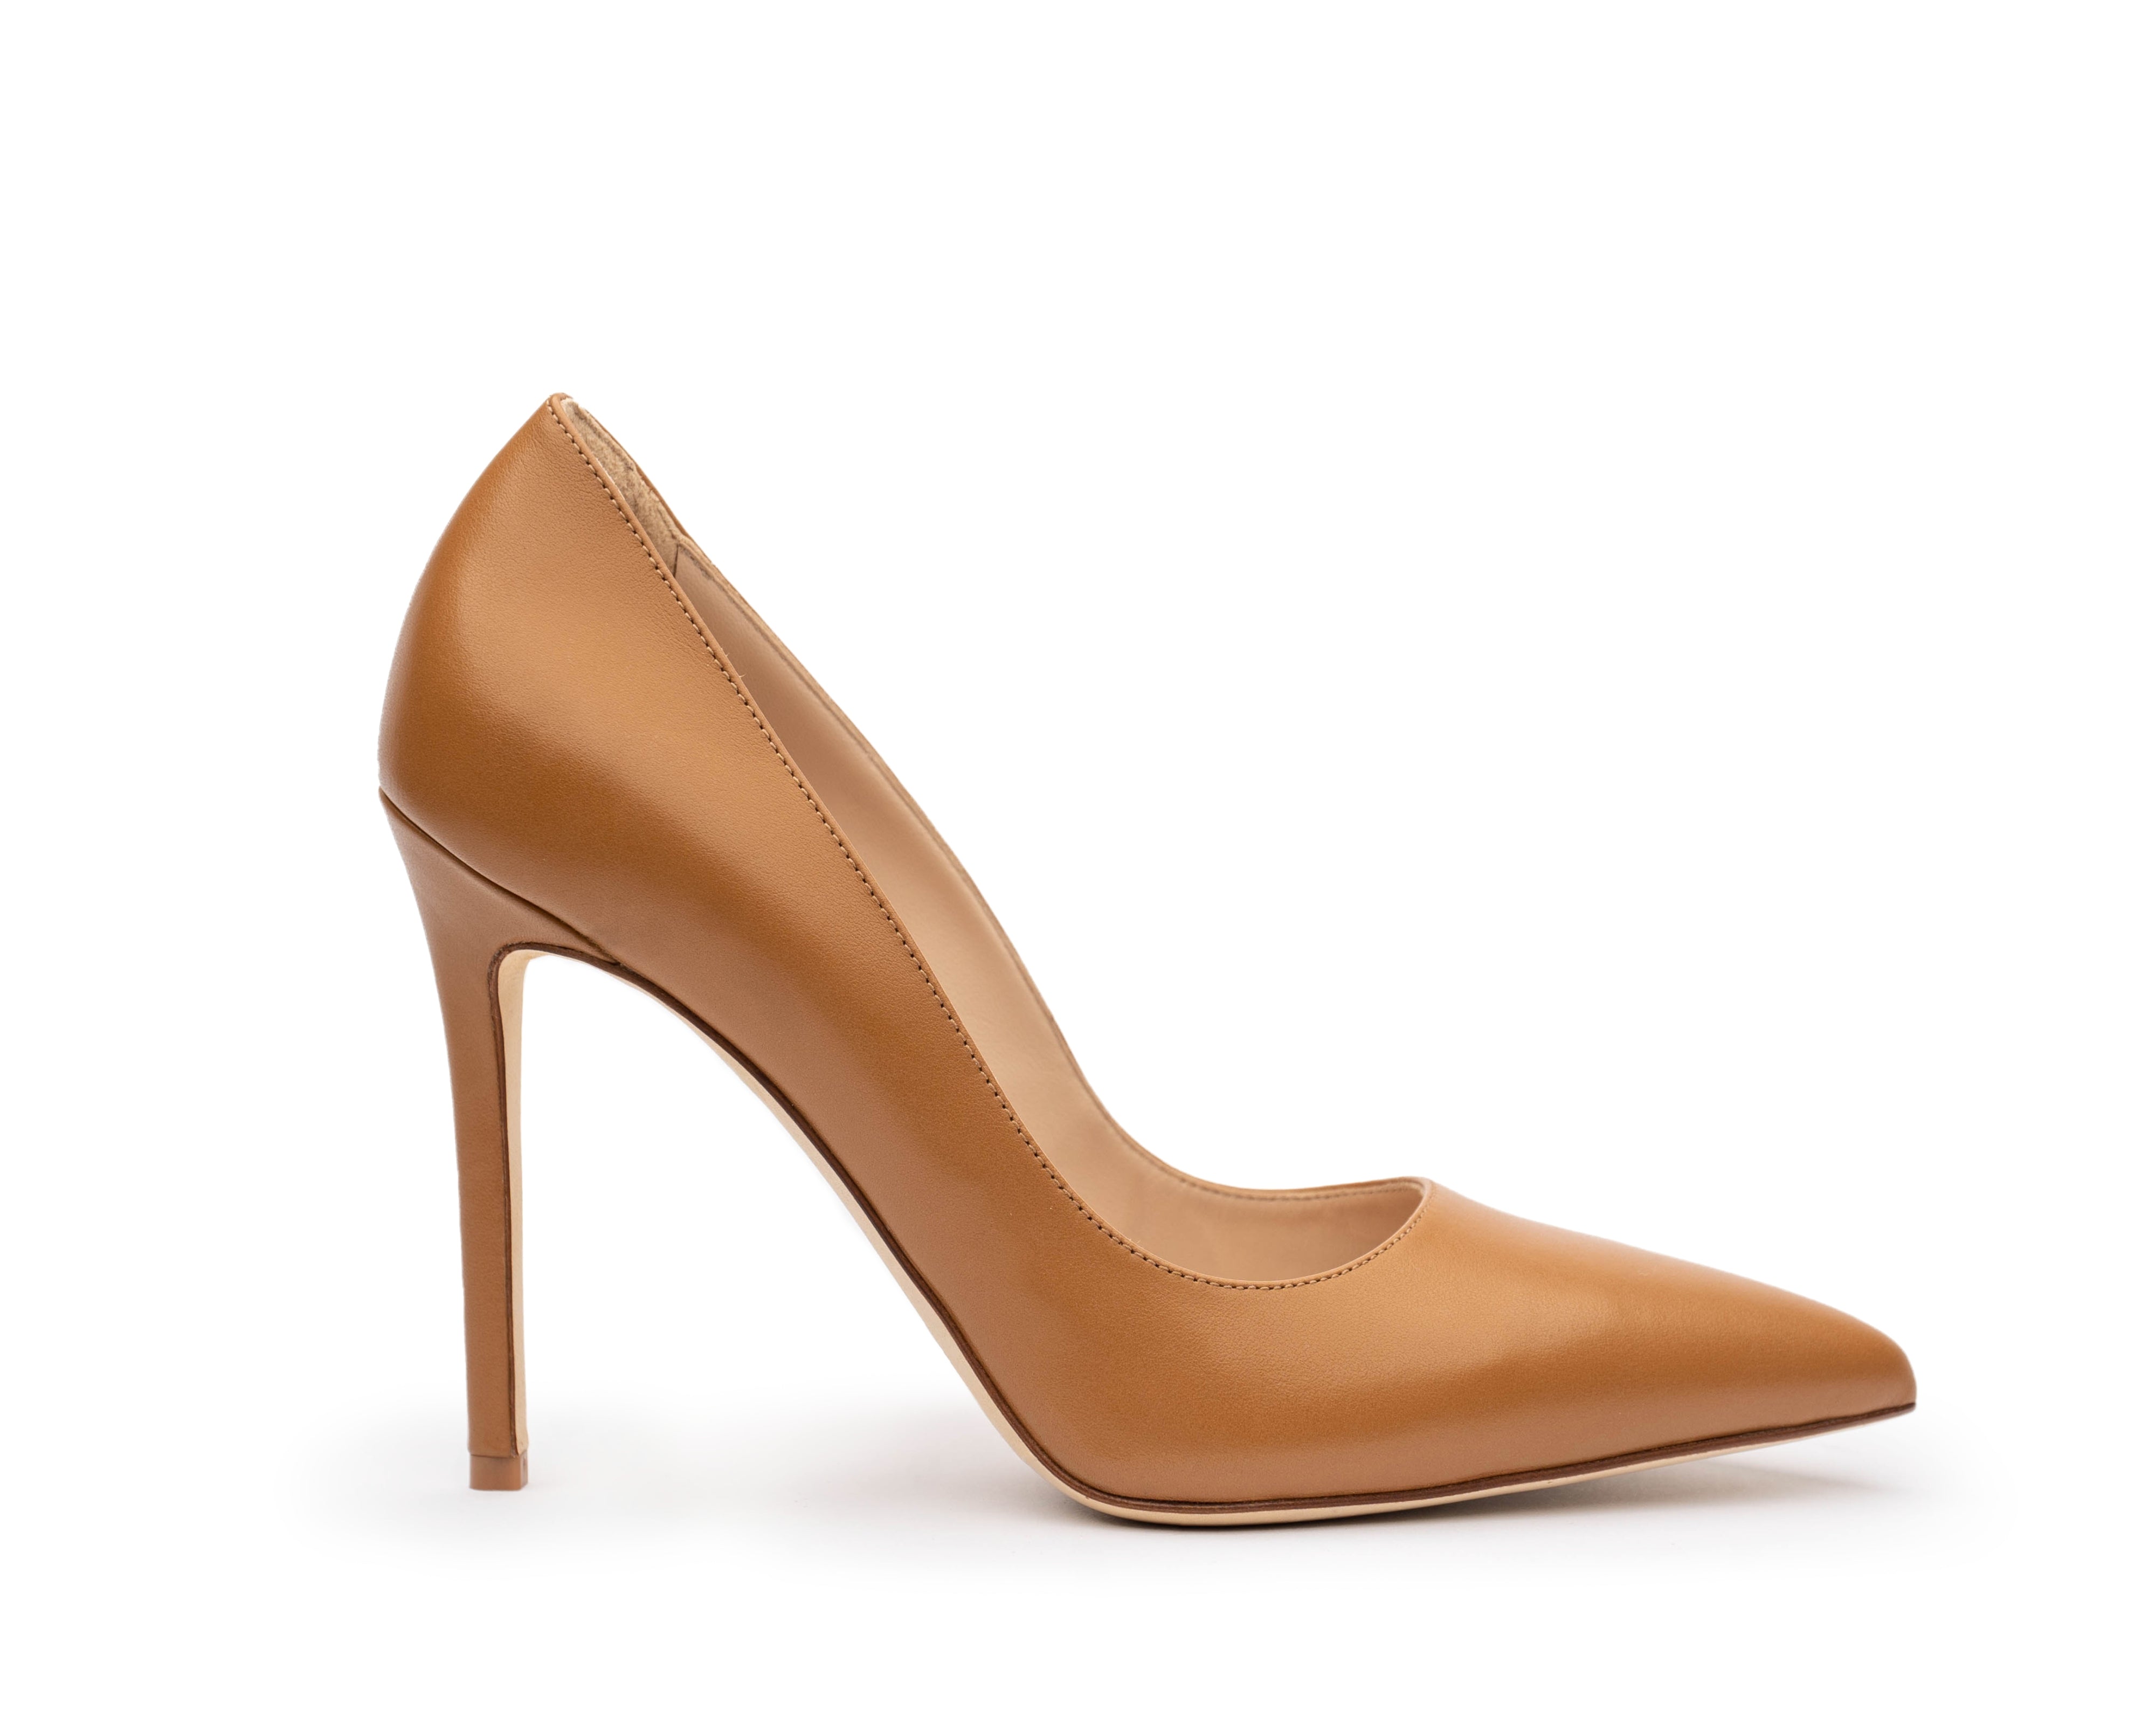 Caramel Mink brown heels. Cushioned insole women's heel comfortable Italian nude pumps. Light brown business shoes.